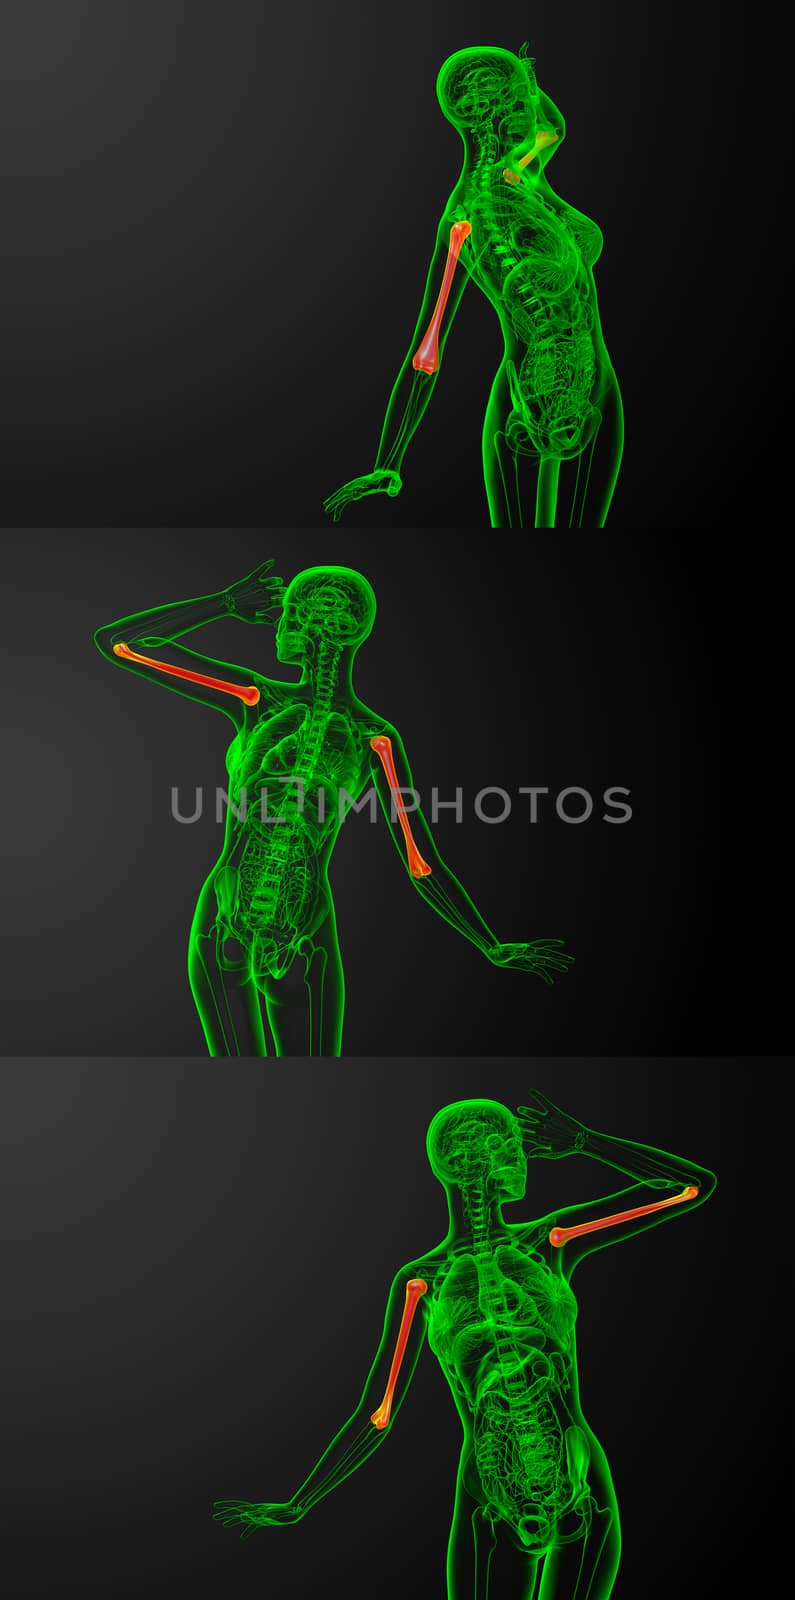 3d rendering medical illustration of the humerus bone